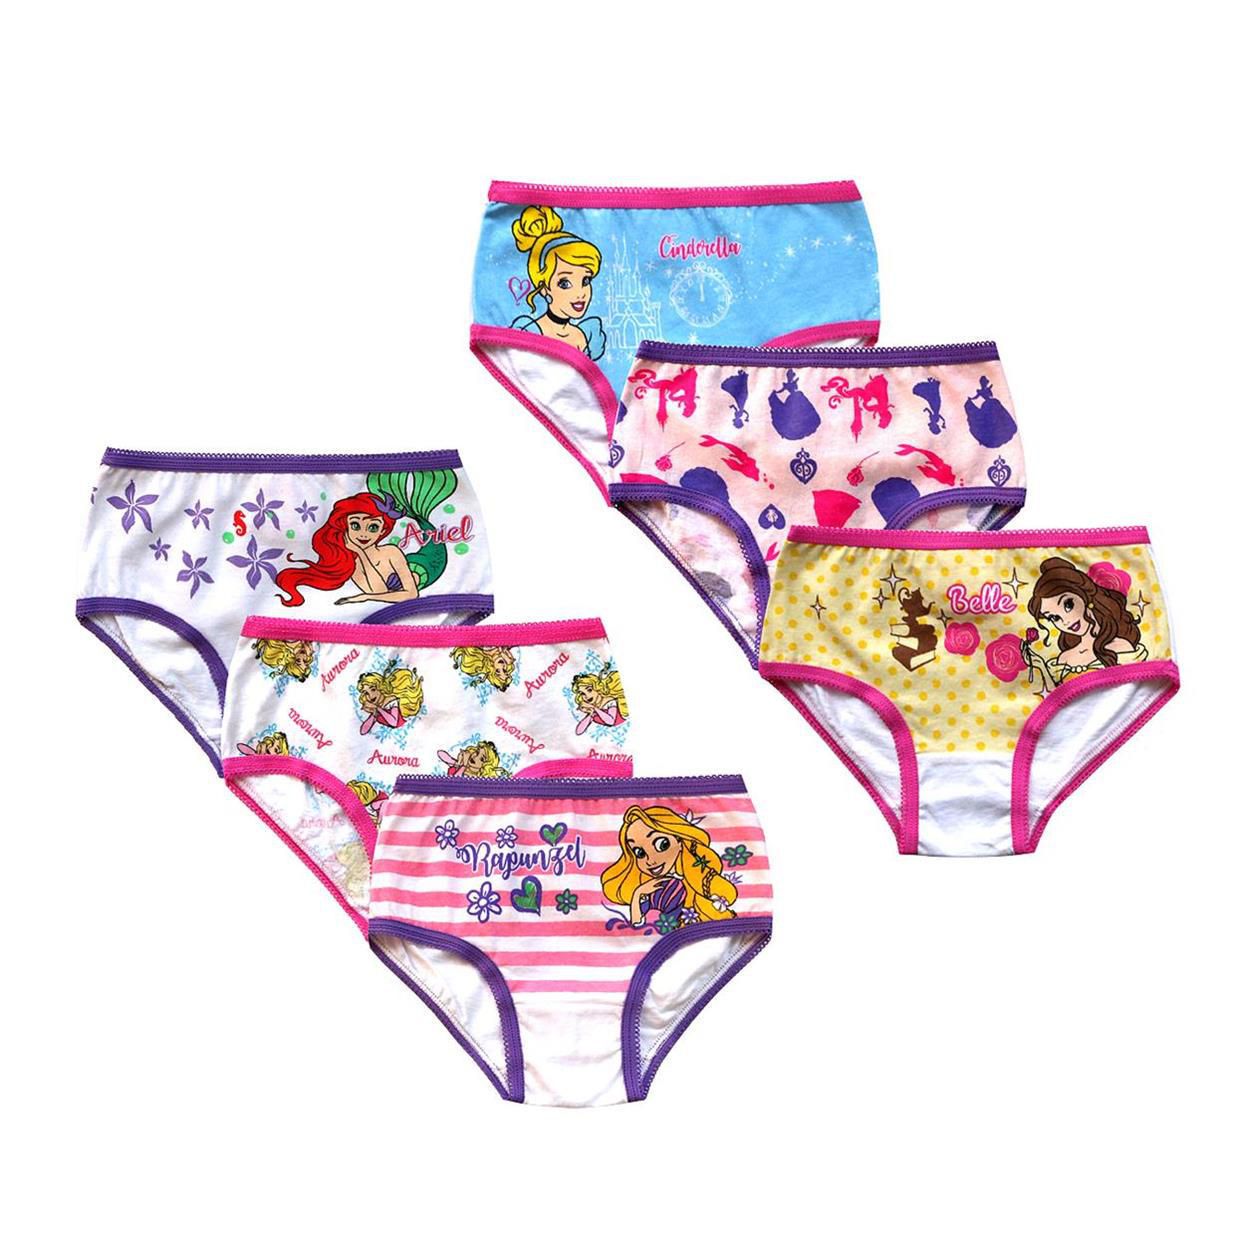 Disney Moana and Cinderella Underwear 2-Pack Toddler Sizes 4T